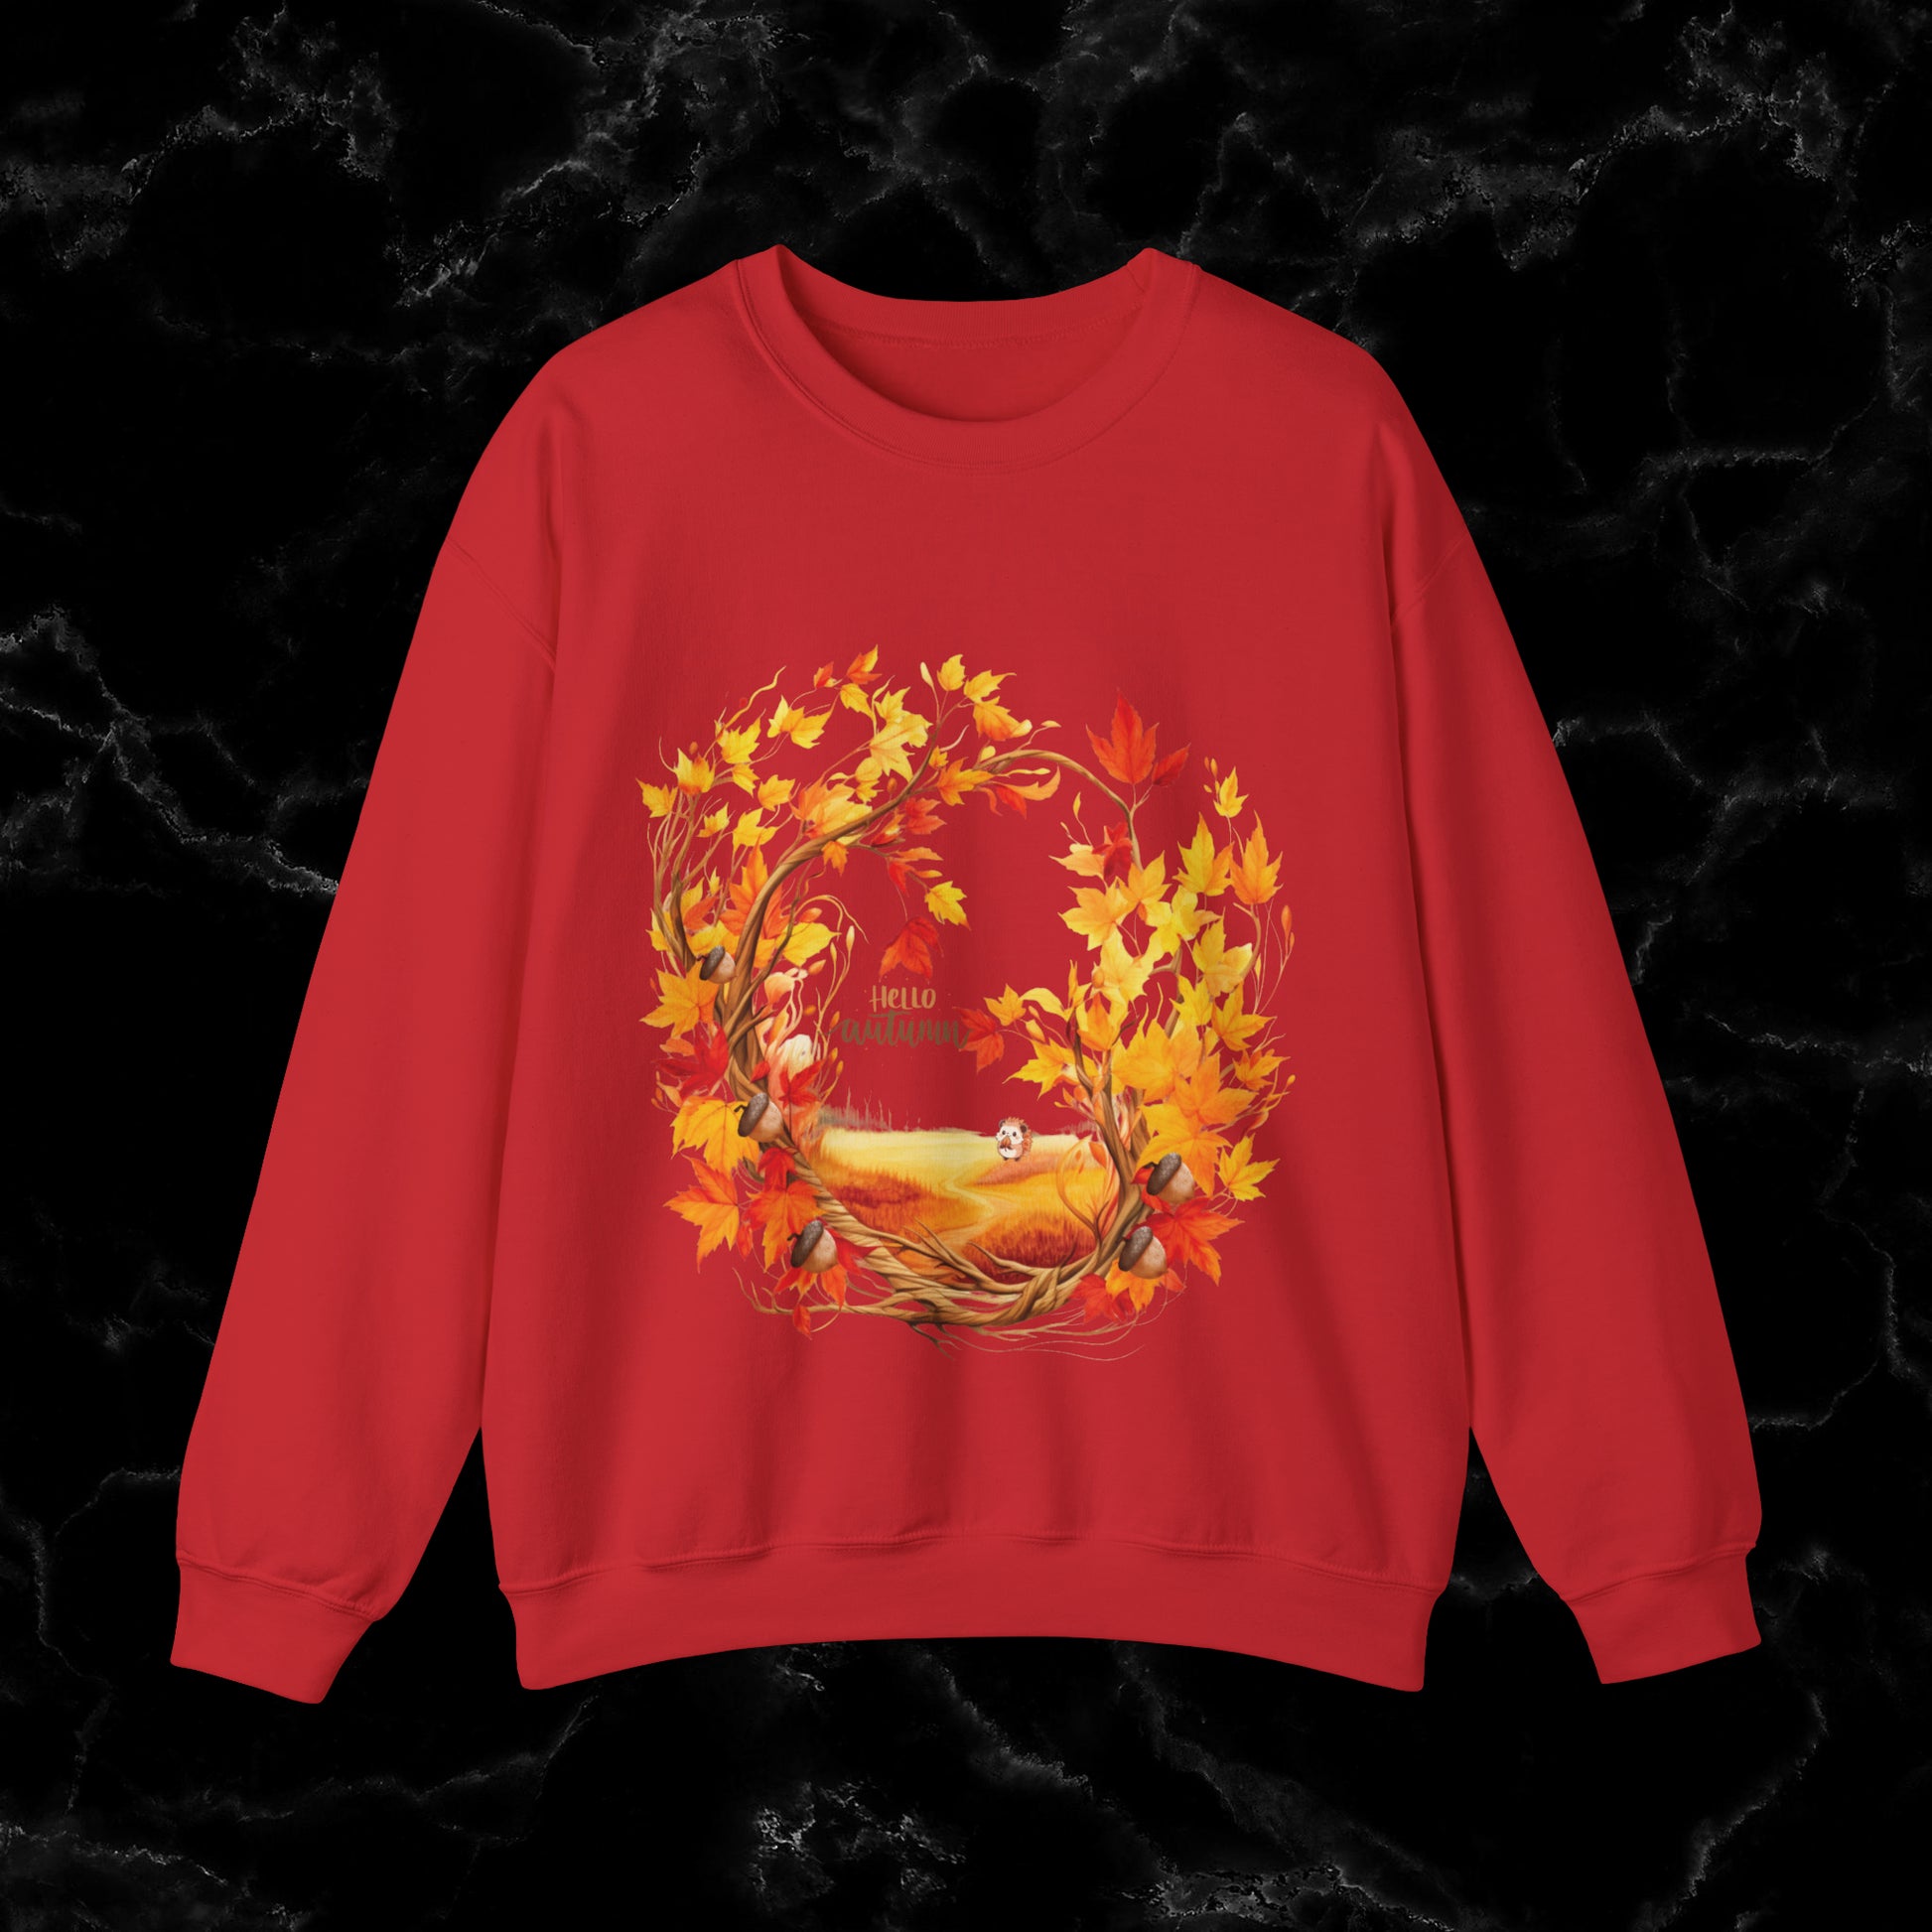 Hello Autumn Sweatshirt | Fall Design - Fall Seasonal Sweatshirt - Beauty Of Autumn Sweatshirt S Red 